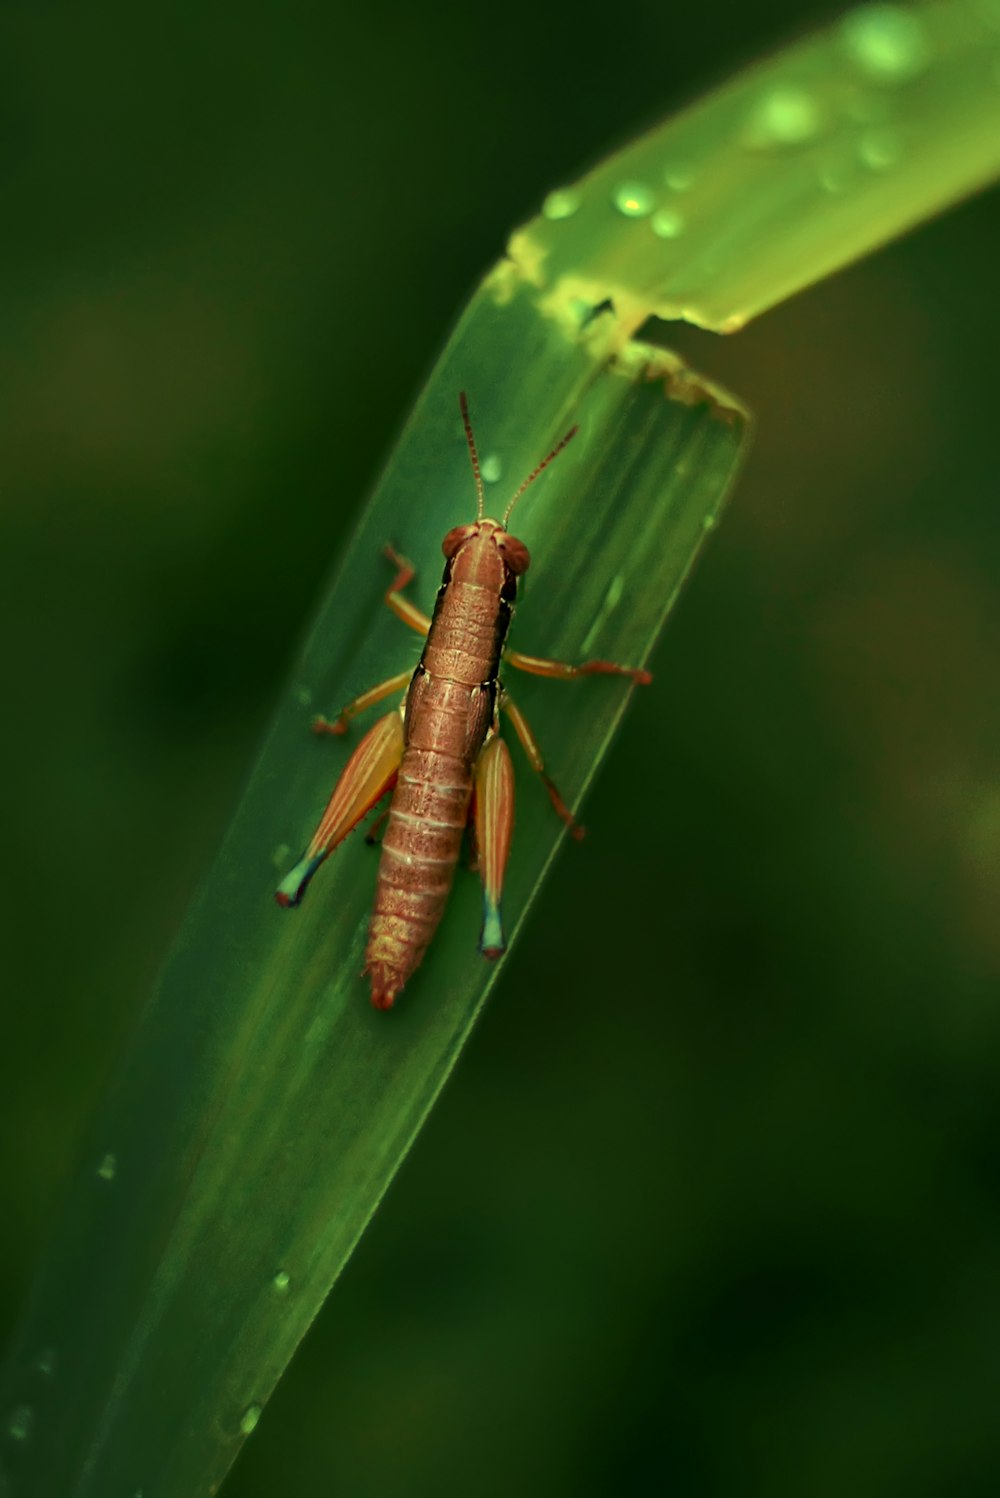 brown cricket on grass